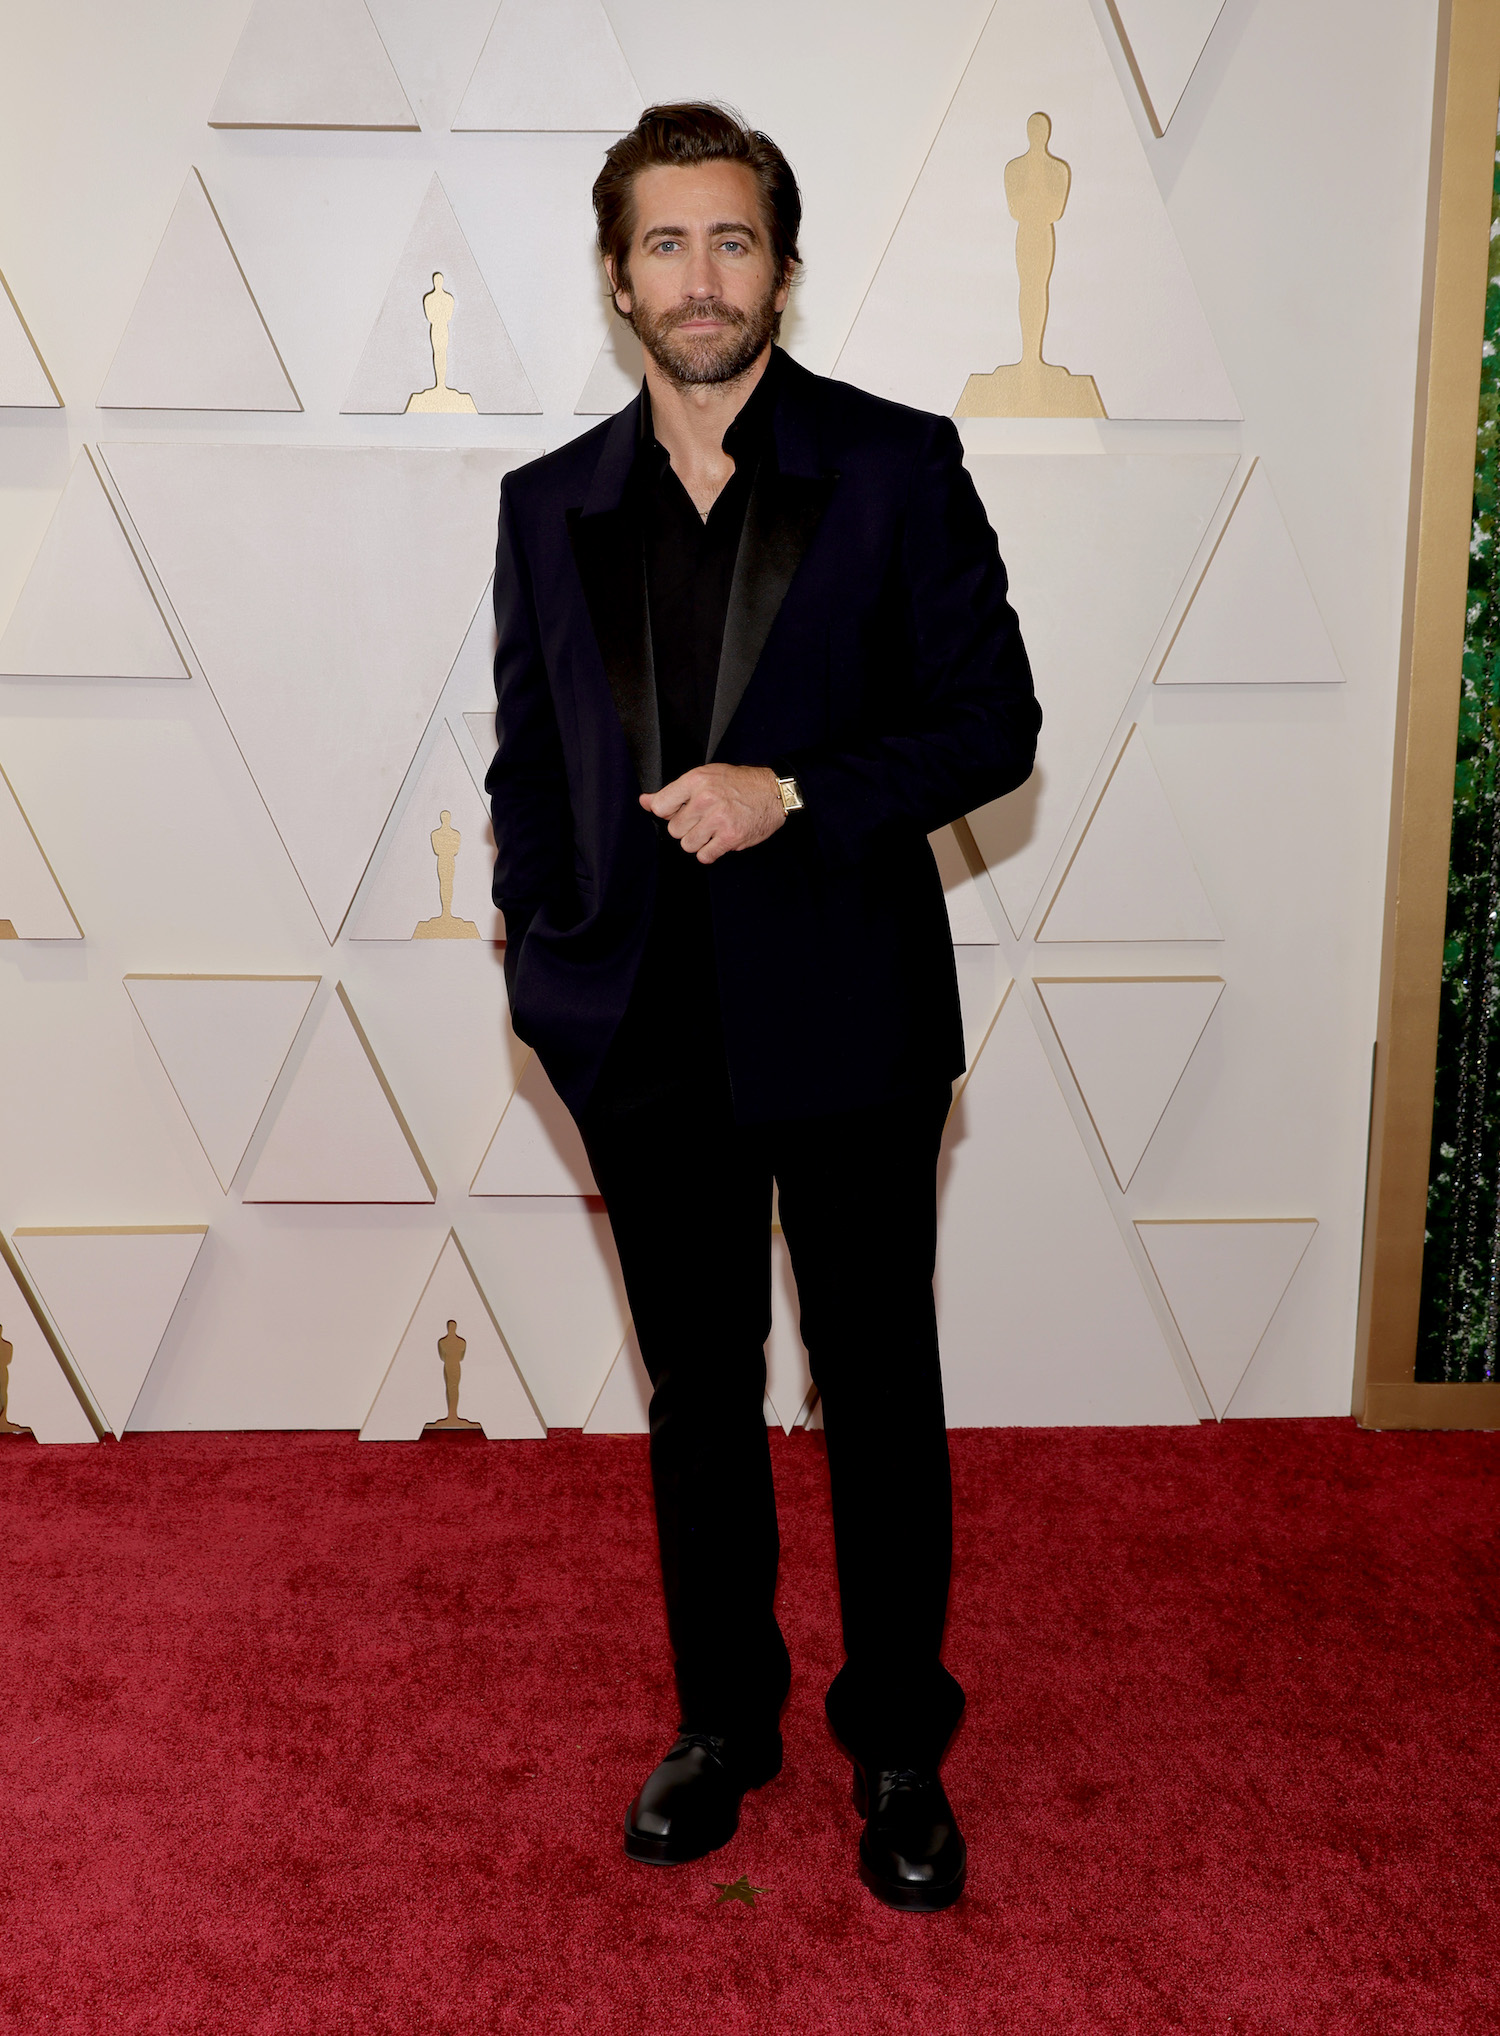 Jake Gyllenhaal at the Oscars 2022